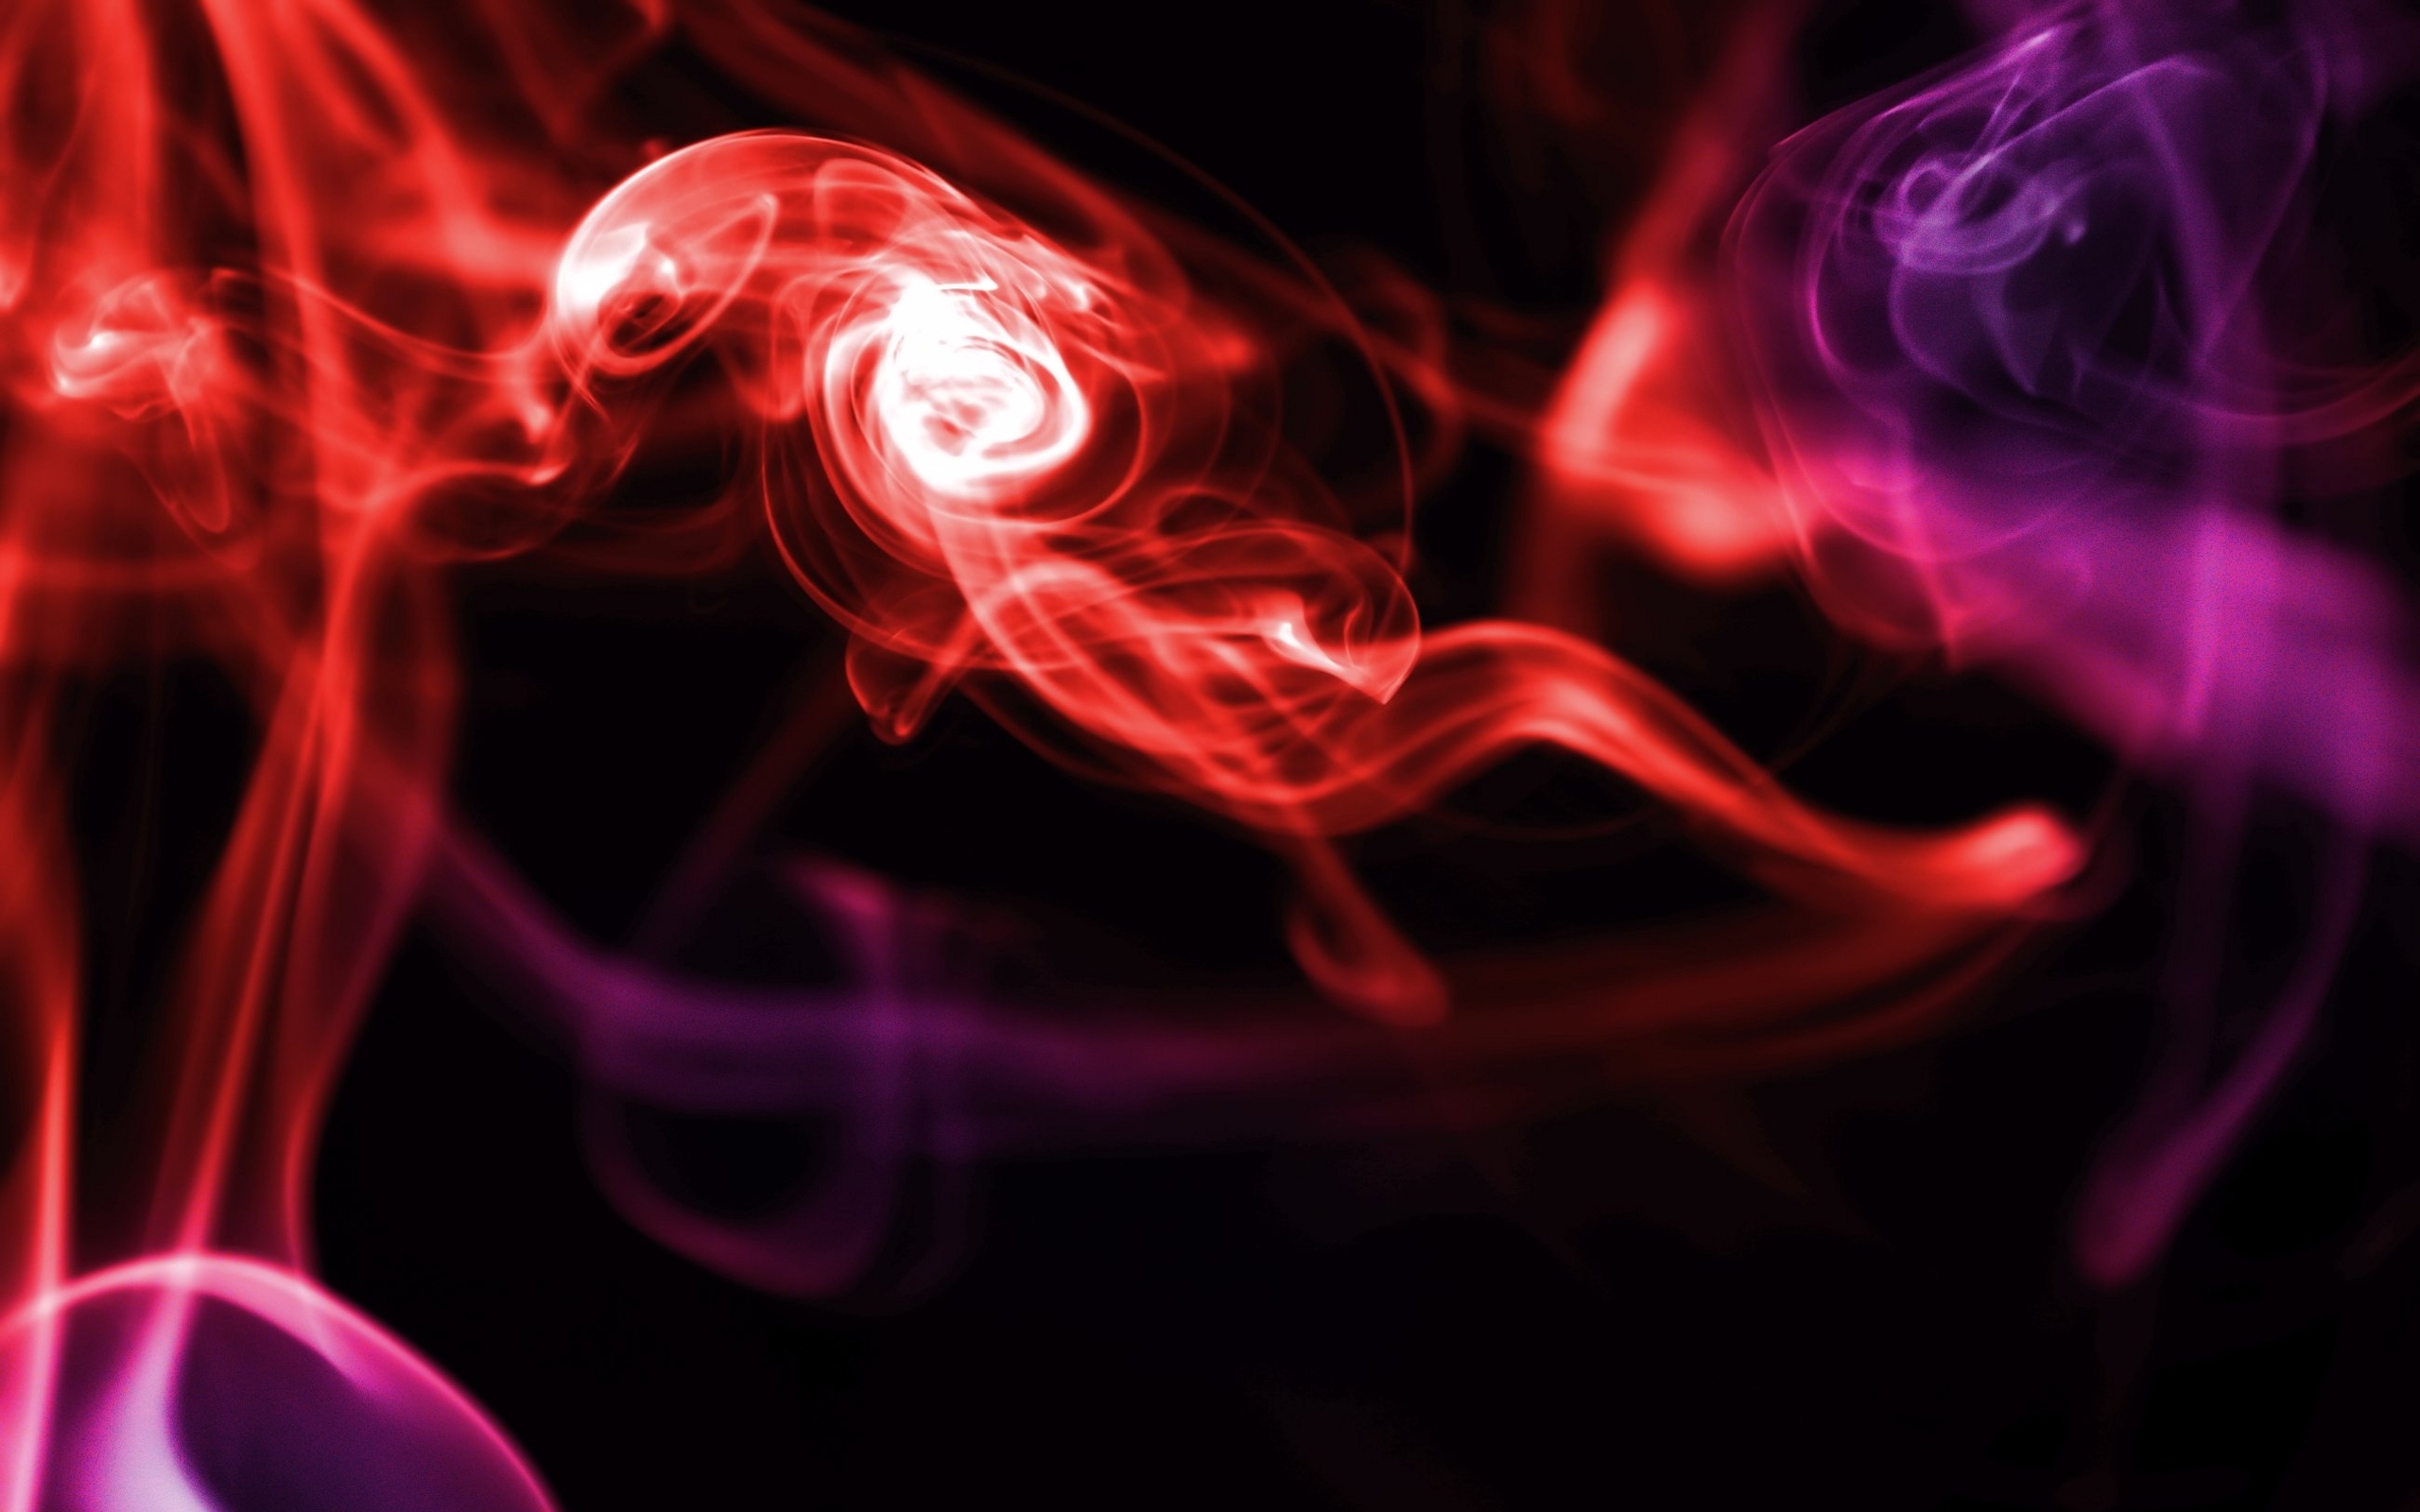 swirly red smoke by vlargg on DeviantArt